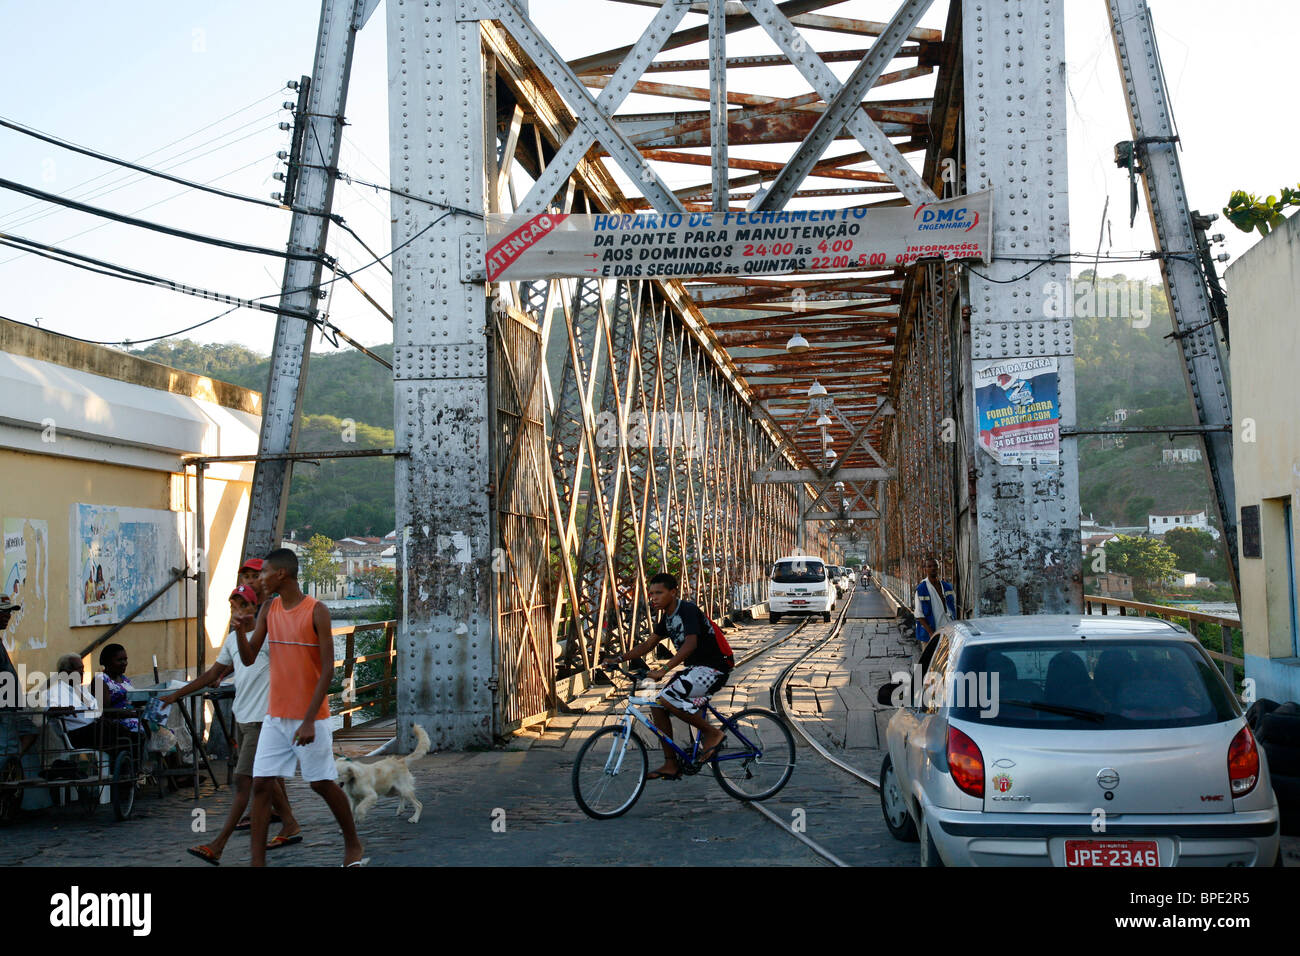 Il ponte che collega Cachoeira e São Felix, Bahia, Brasile. Foto Stock